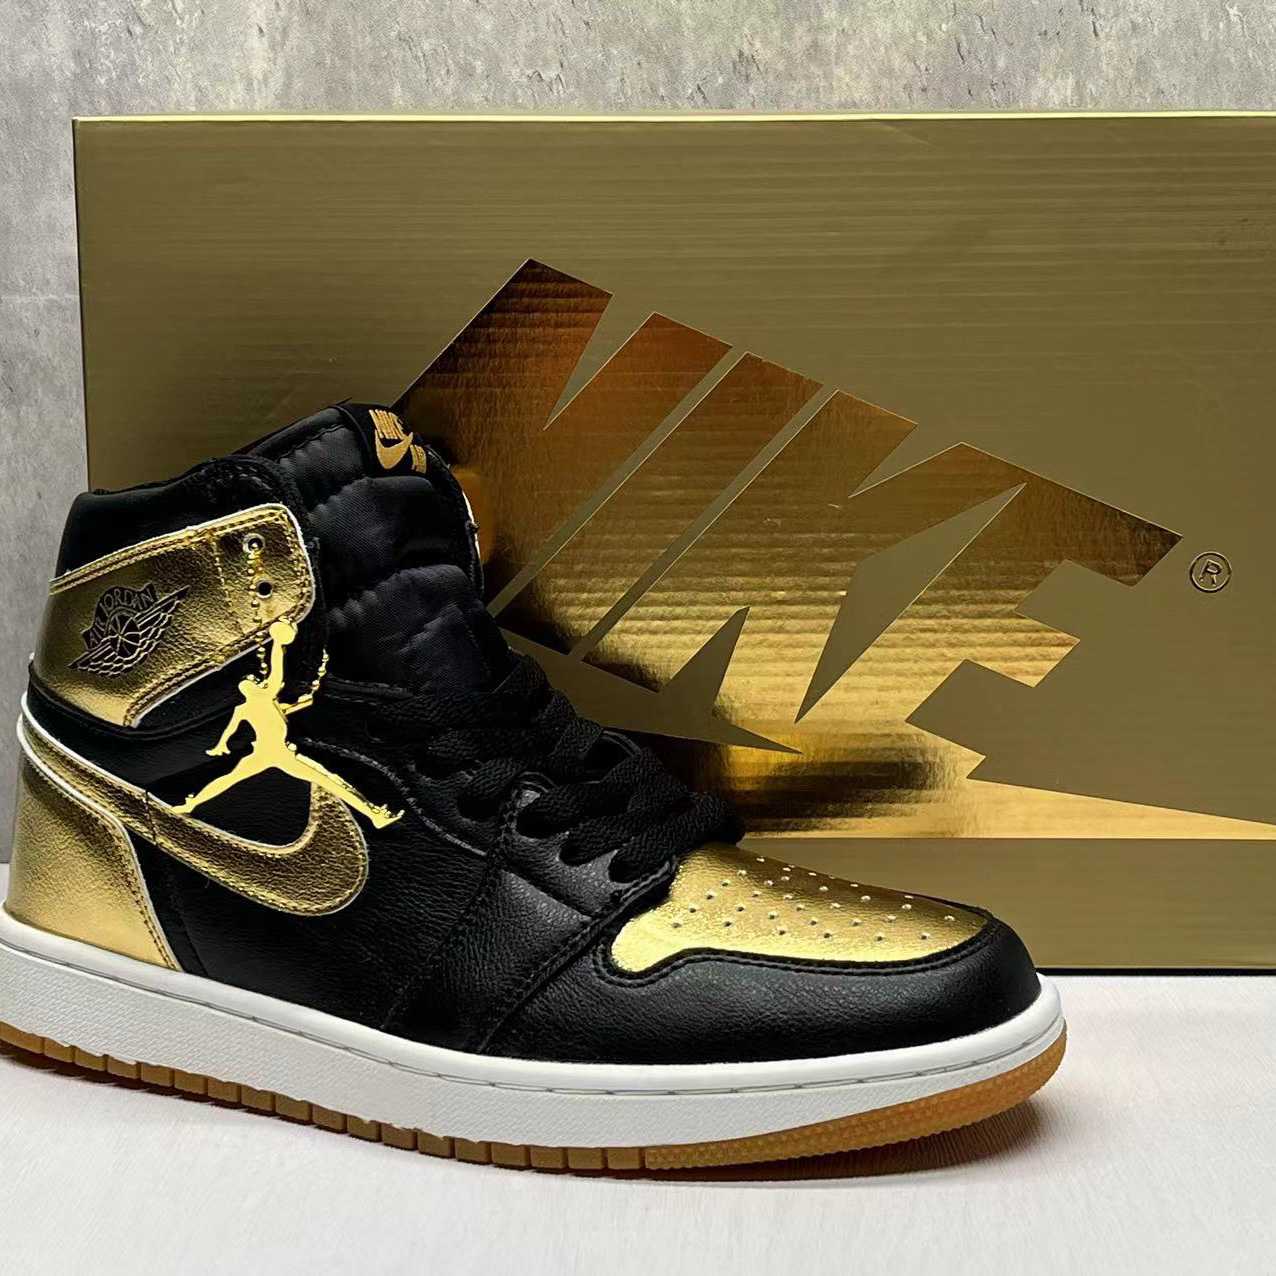 Jordan 1 High OG “Metallic Gold” Sneaker   DZ5485-071 - DesignerGu